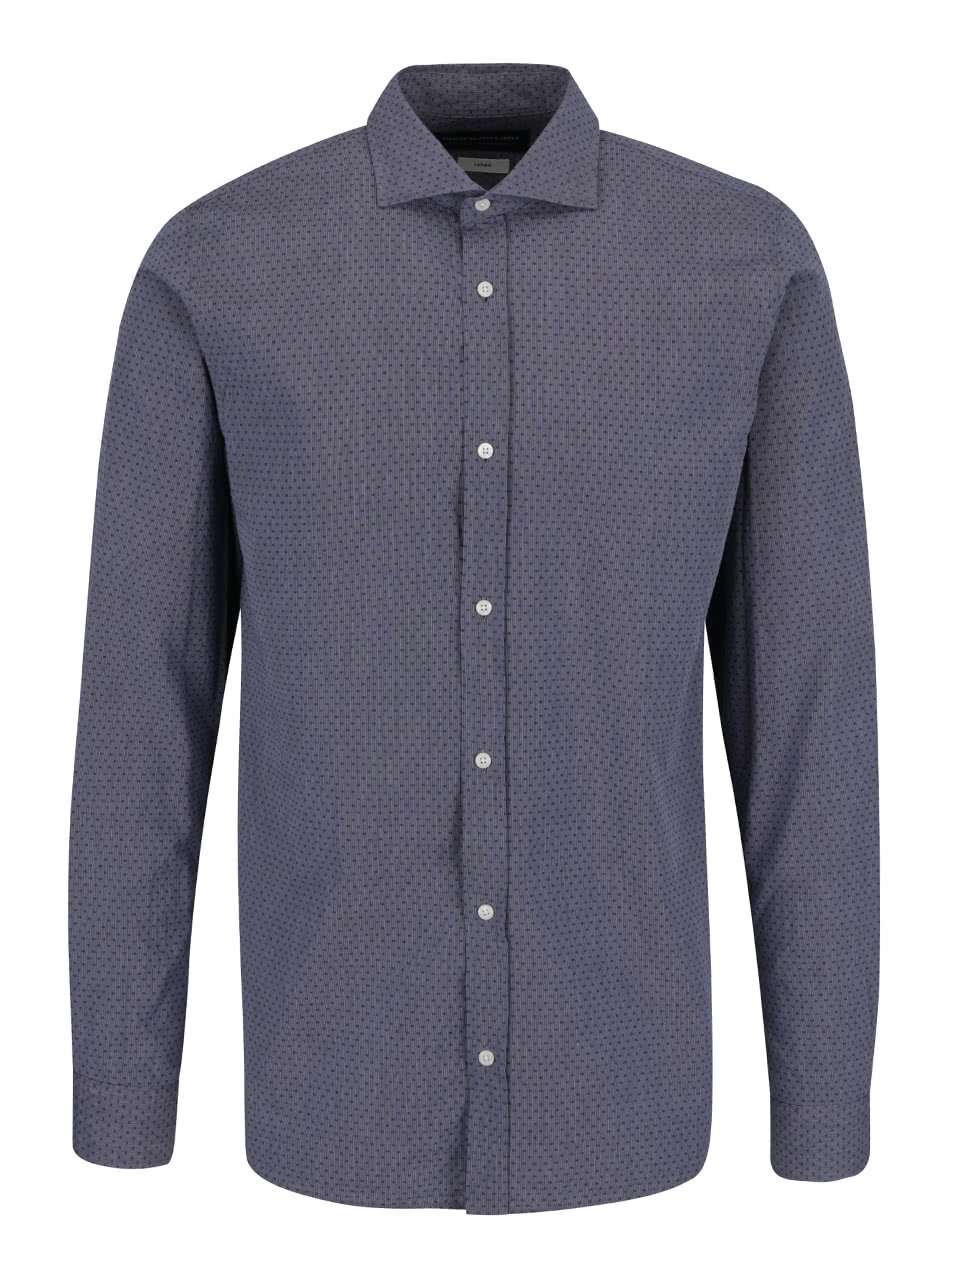 Modro-šedá slim fit košile s jemným vzorem Jack & Jones Ethan